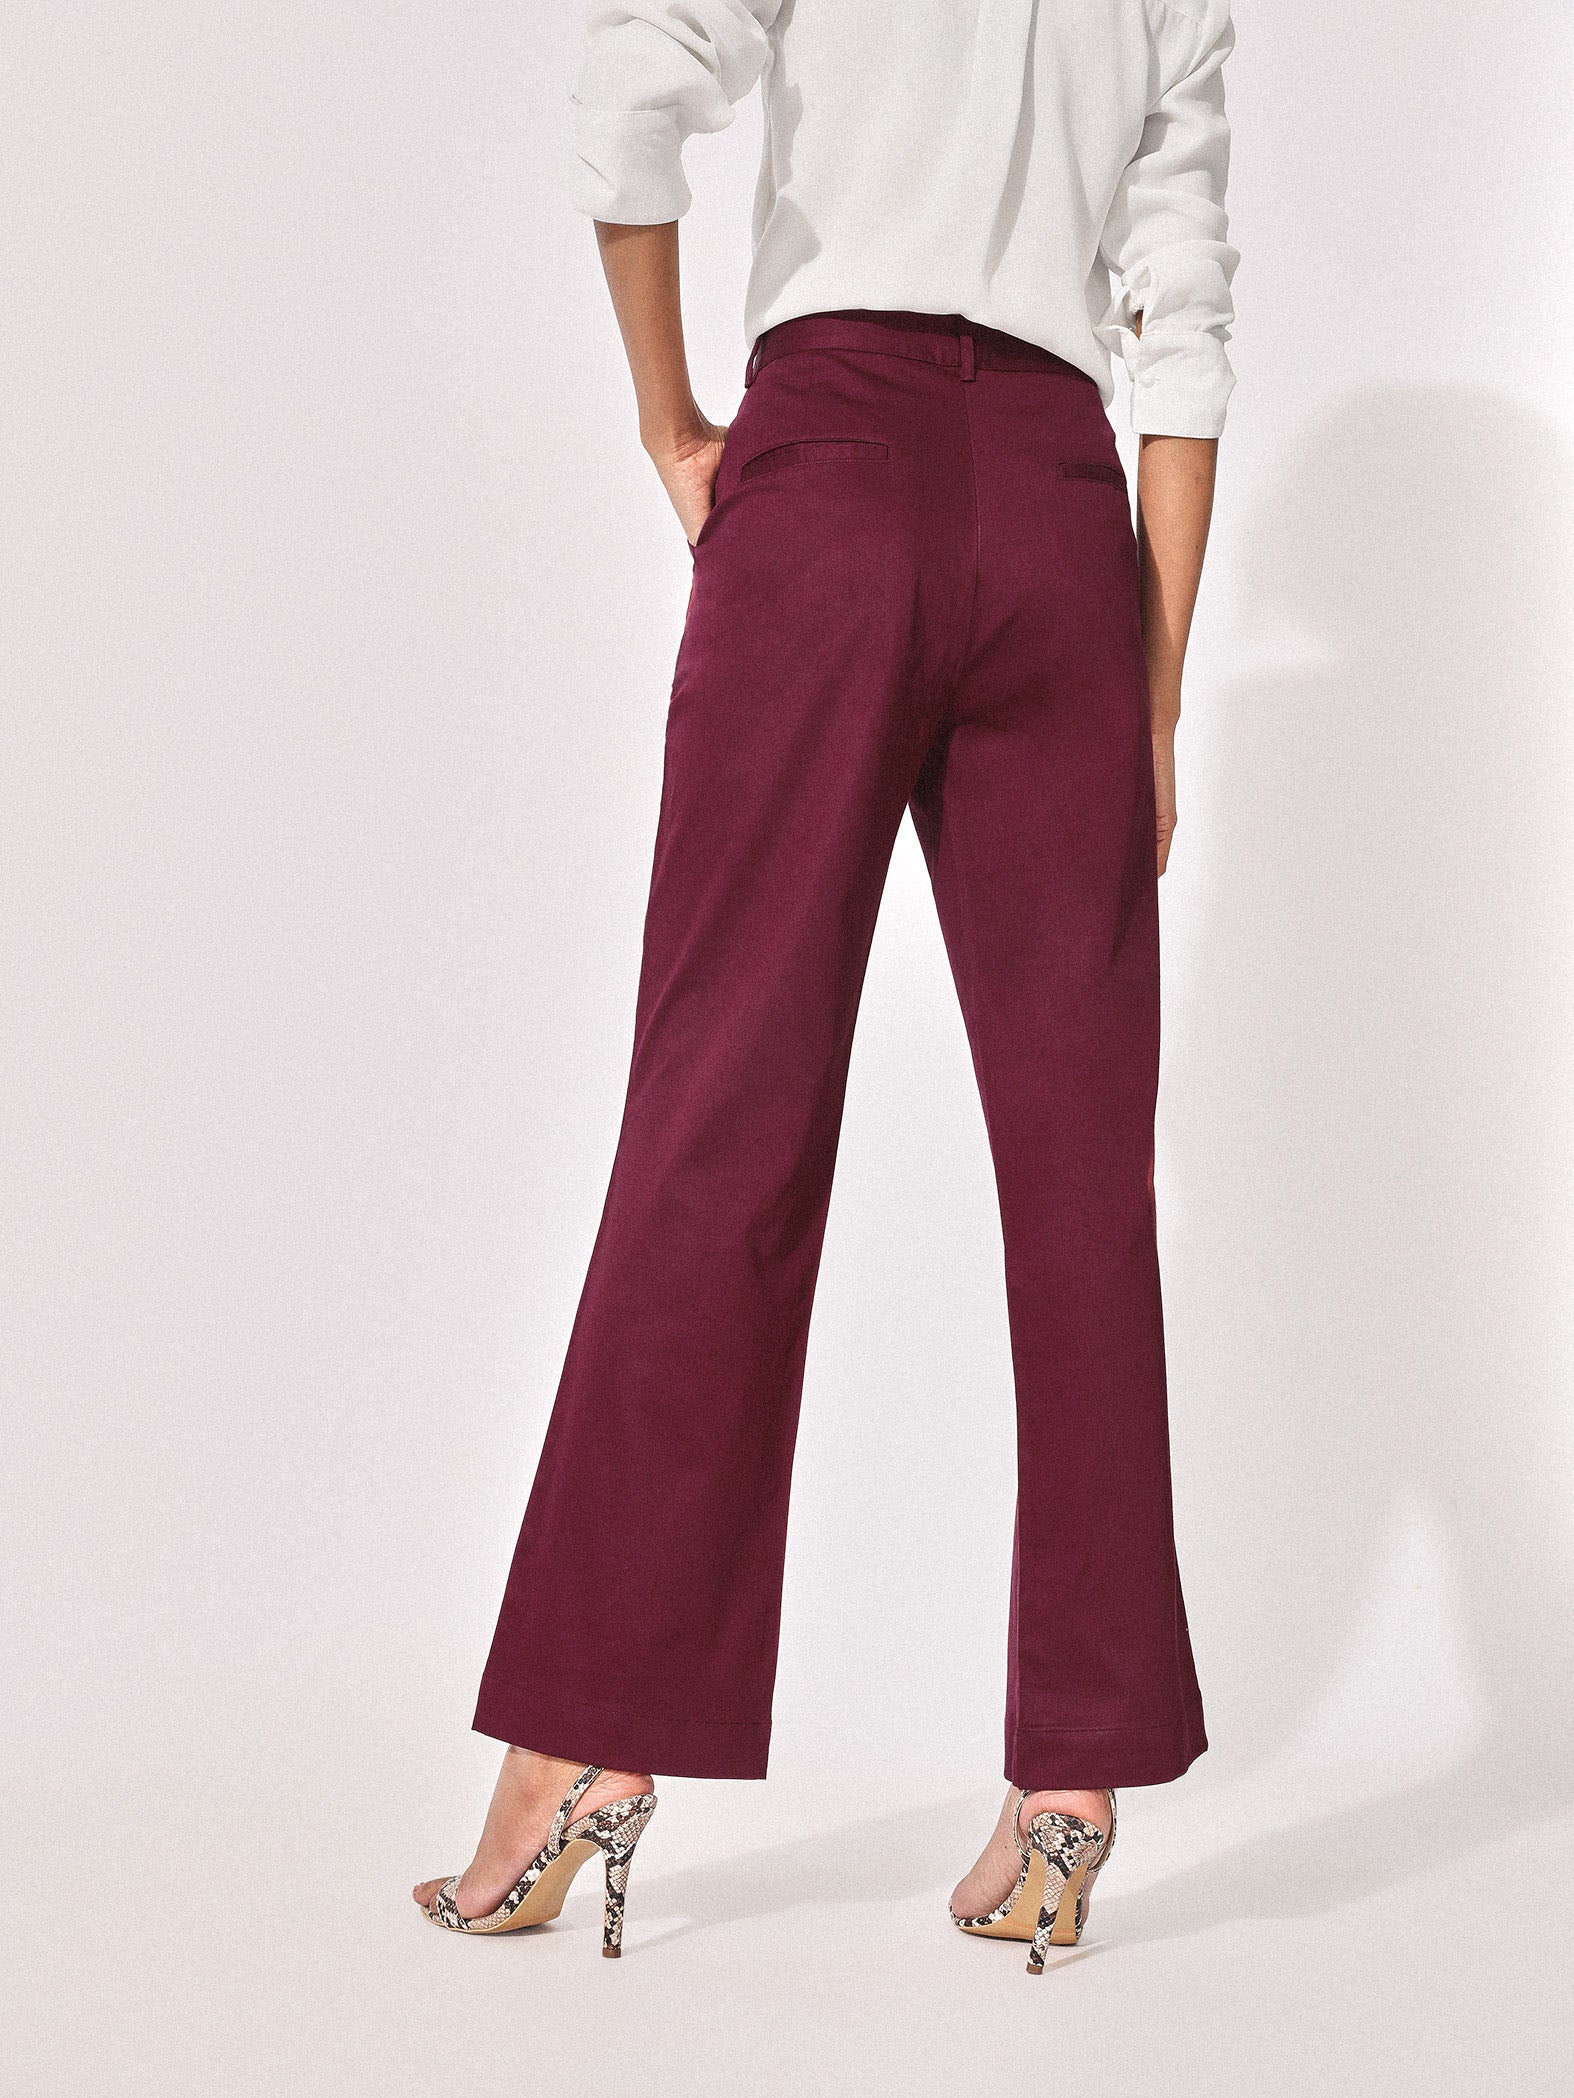 burgundy flare pants